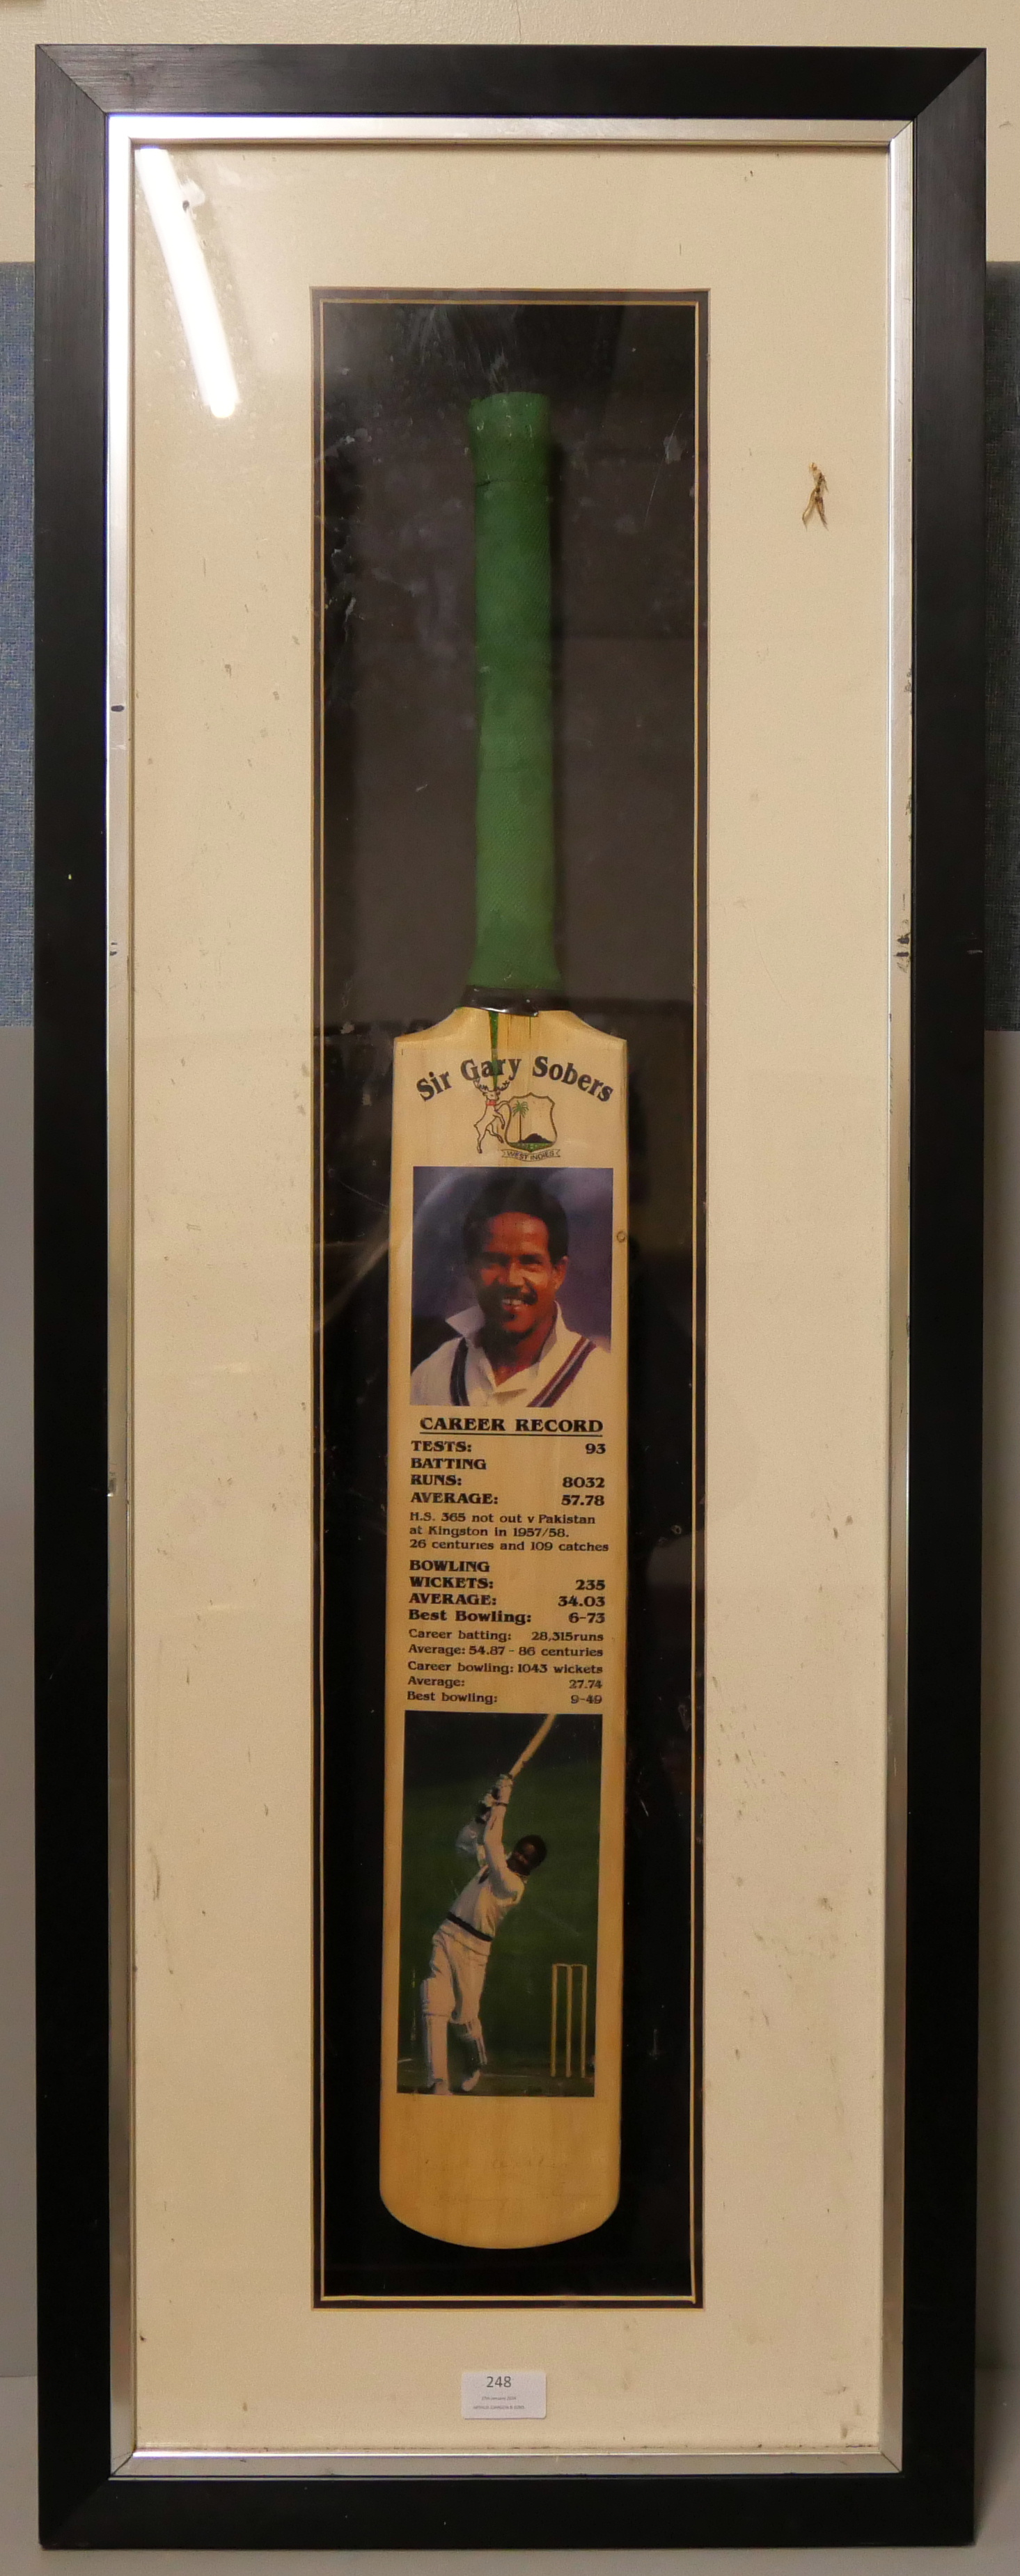 A commemorative, signed Sir Gary Sobers cricket bat